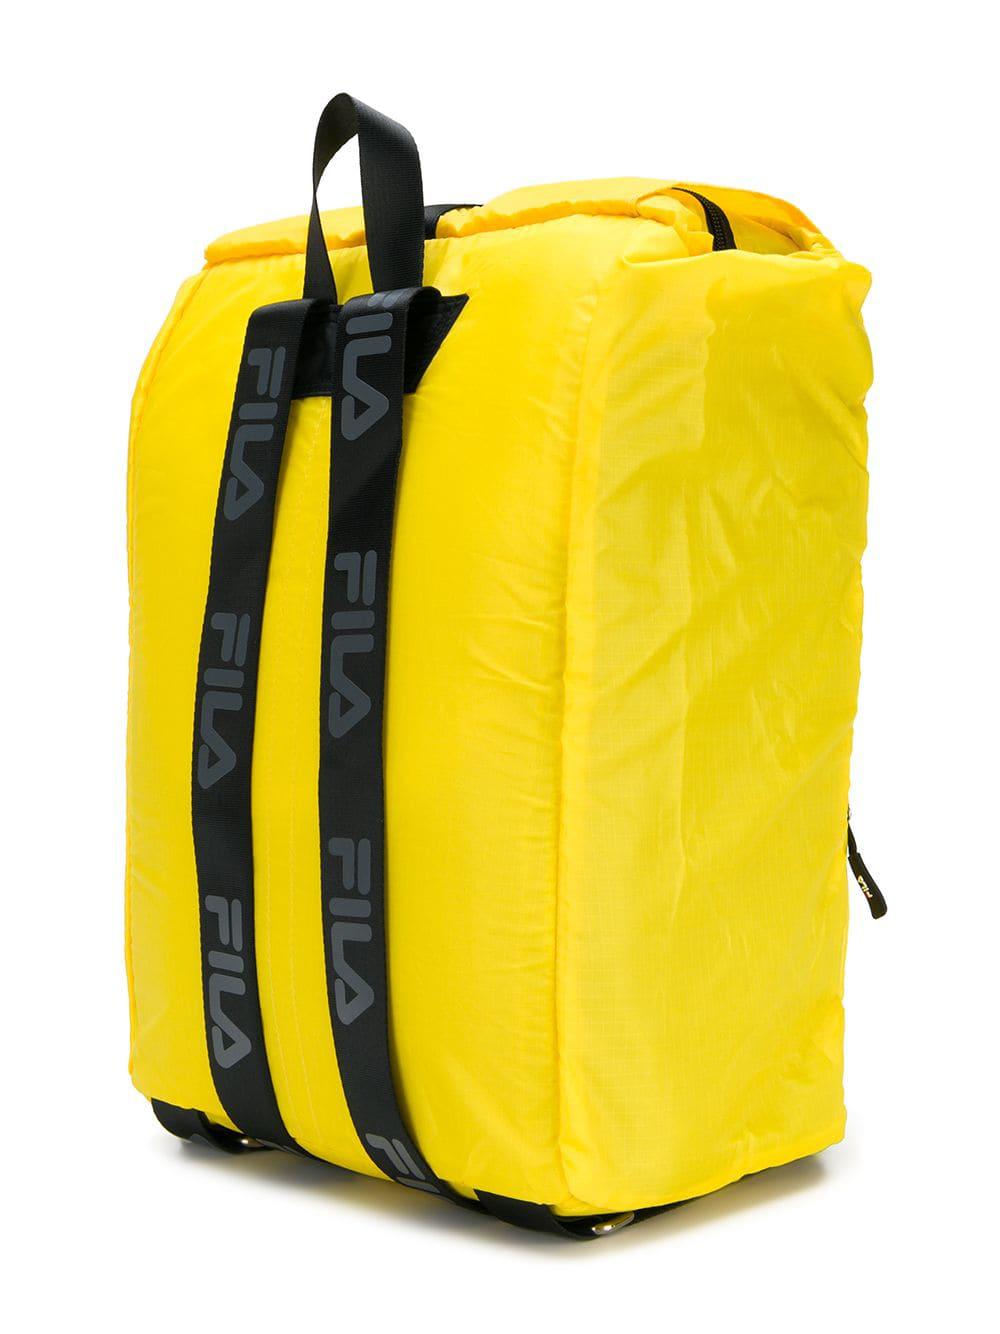 yellow fila backpack